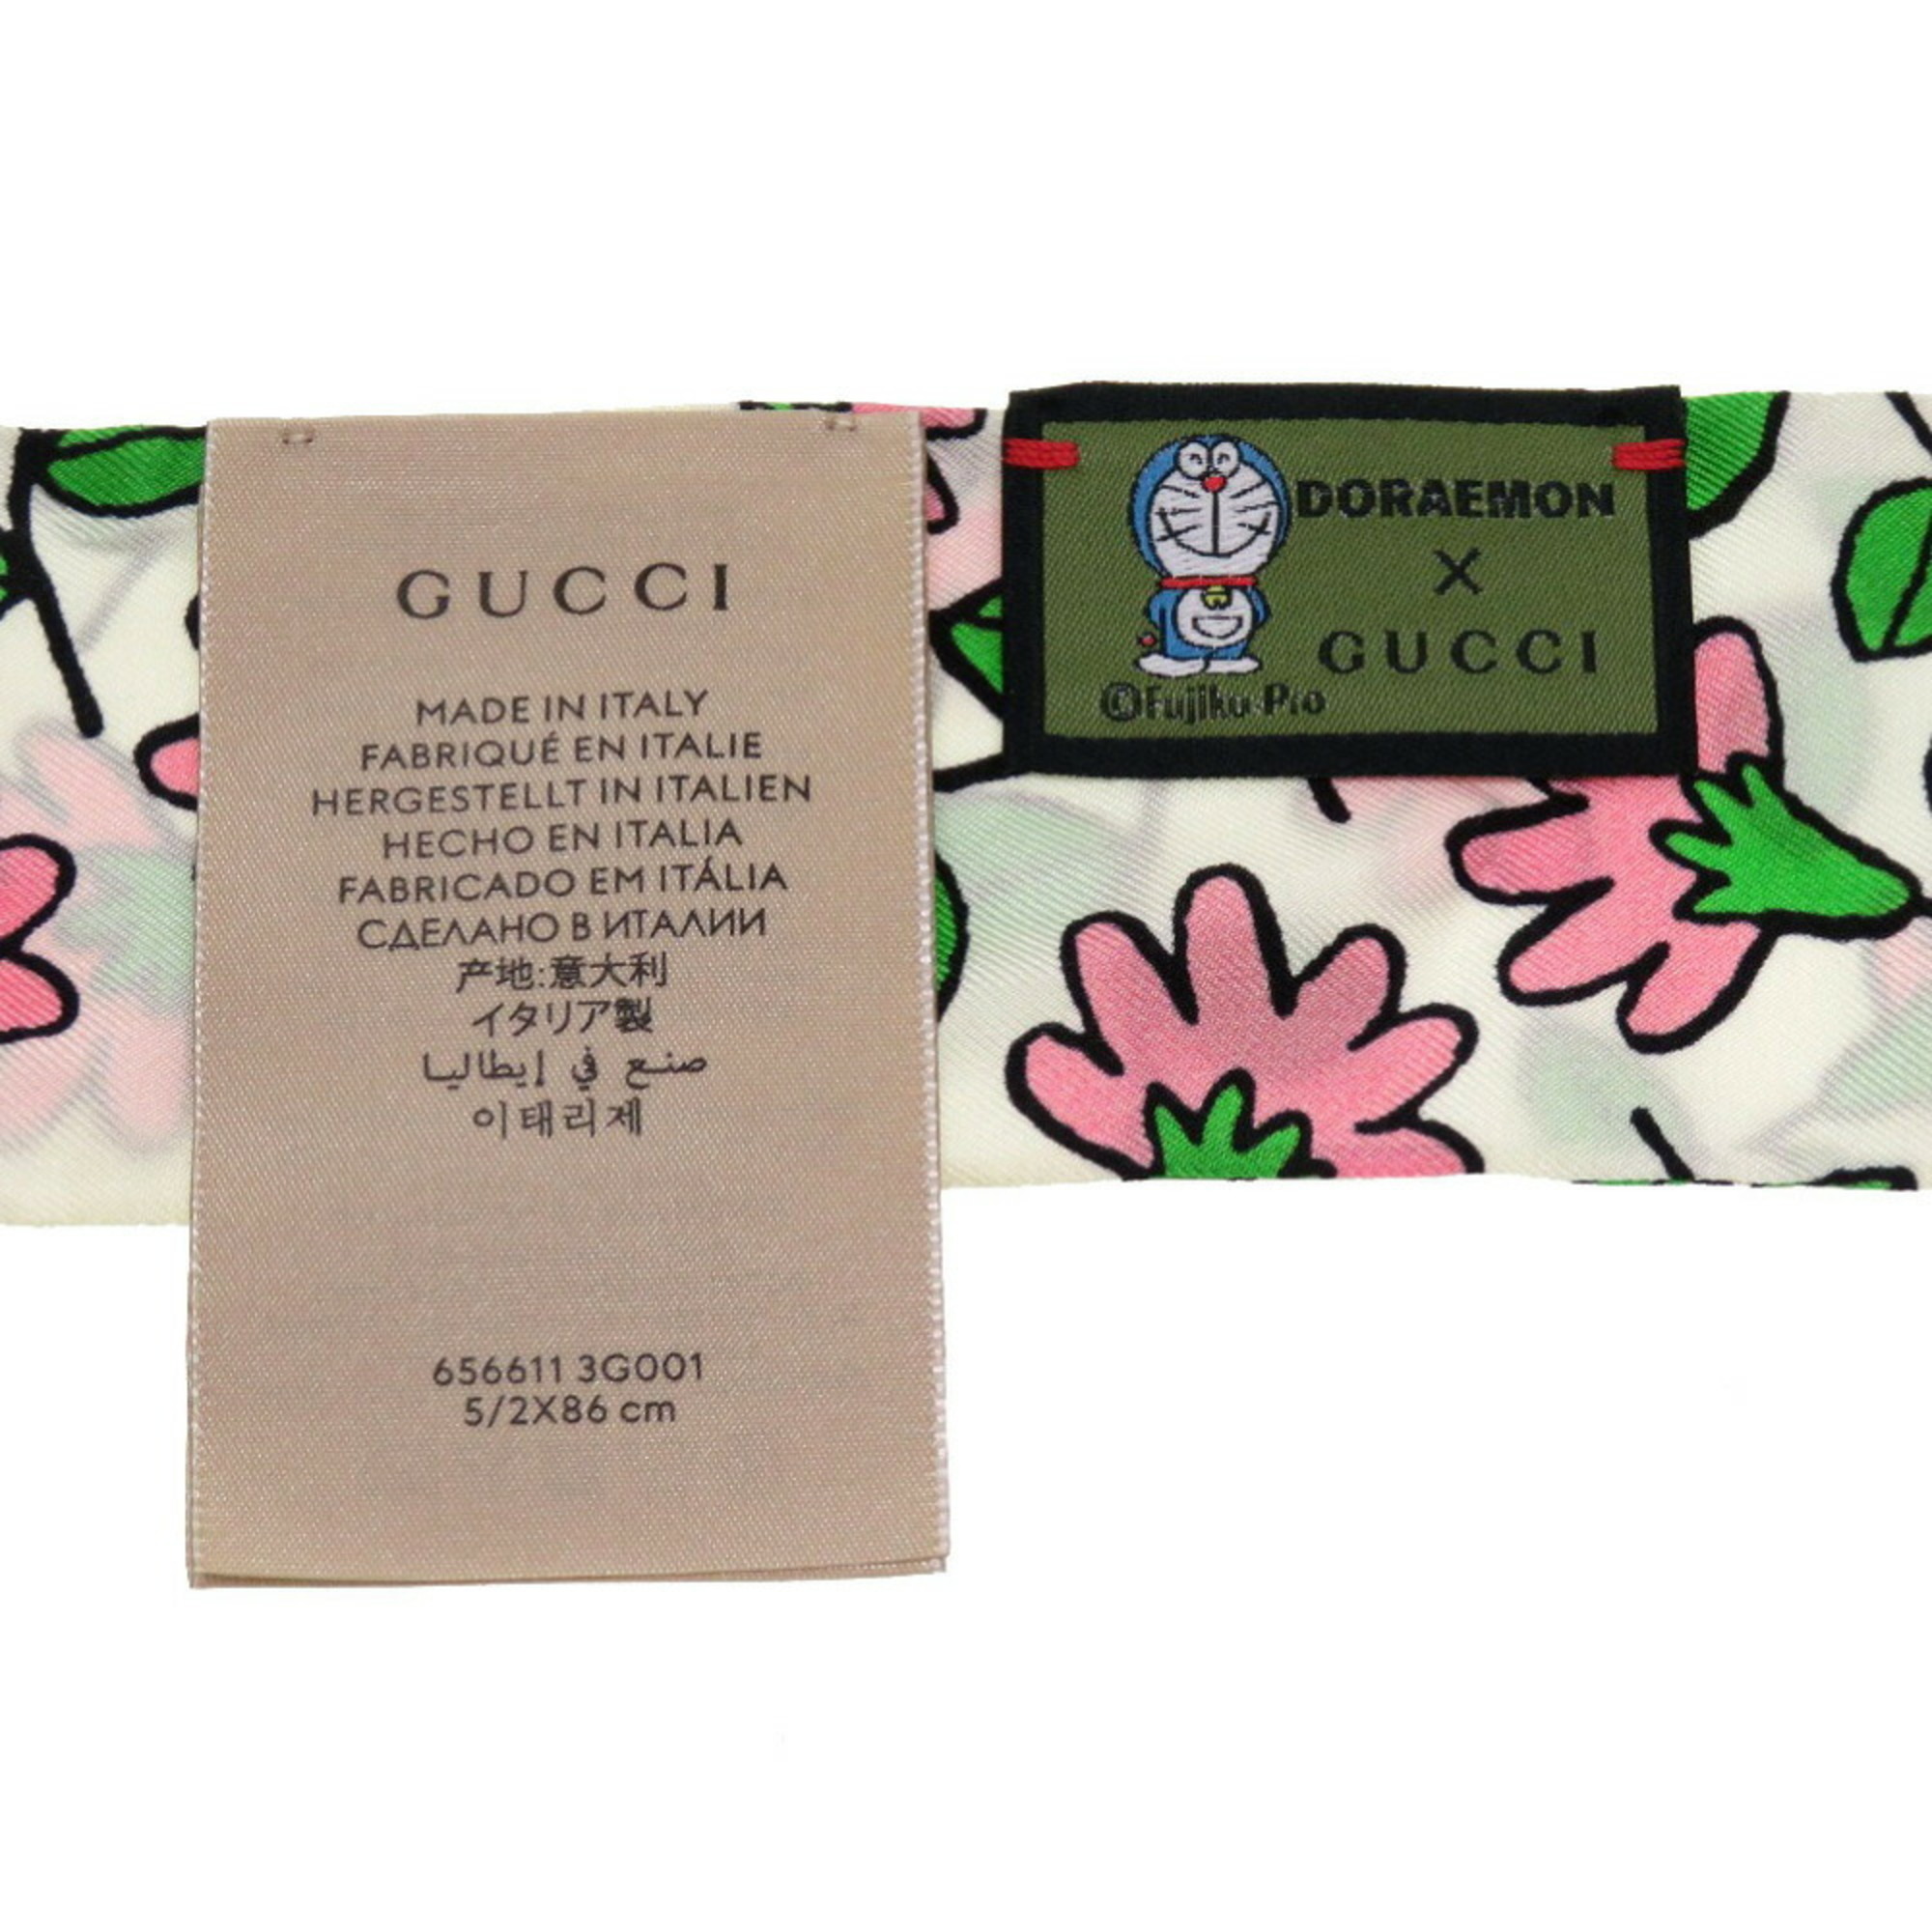 Gucci x Doraemon collaboration 656611 silk ivory scarf muffler